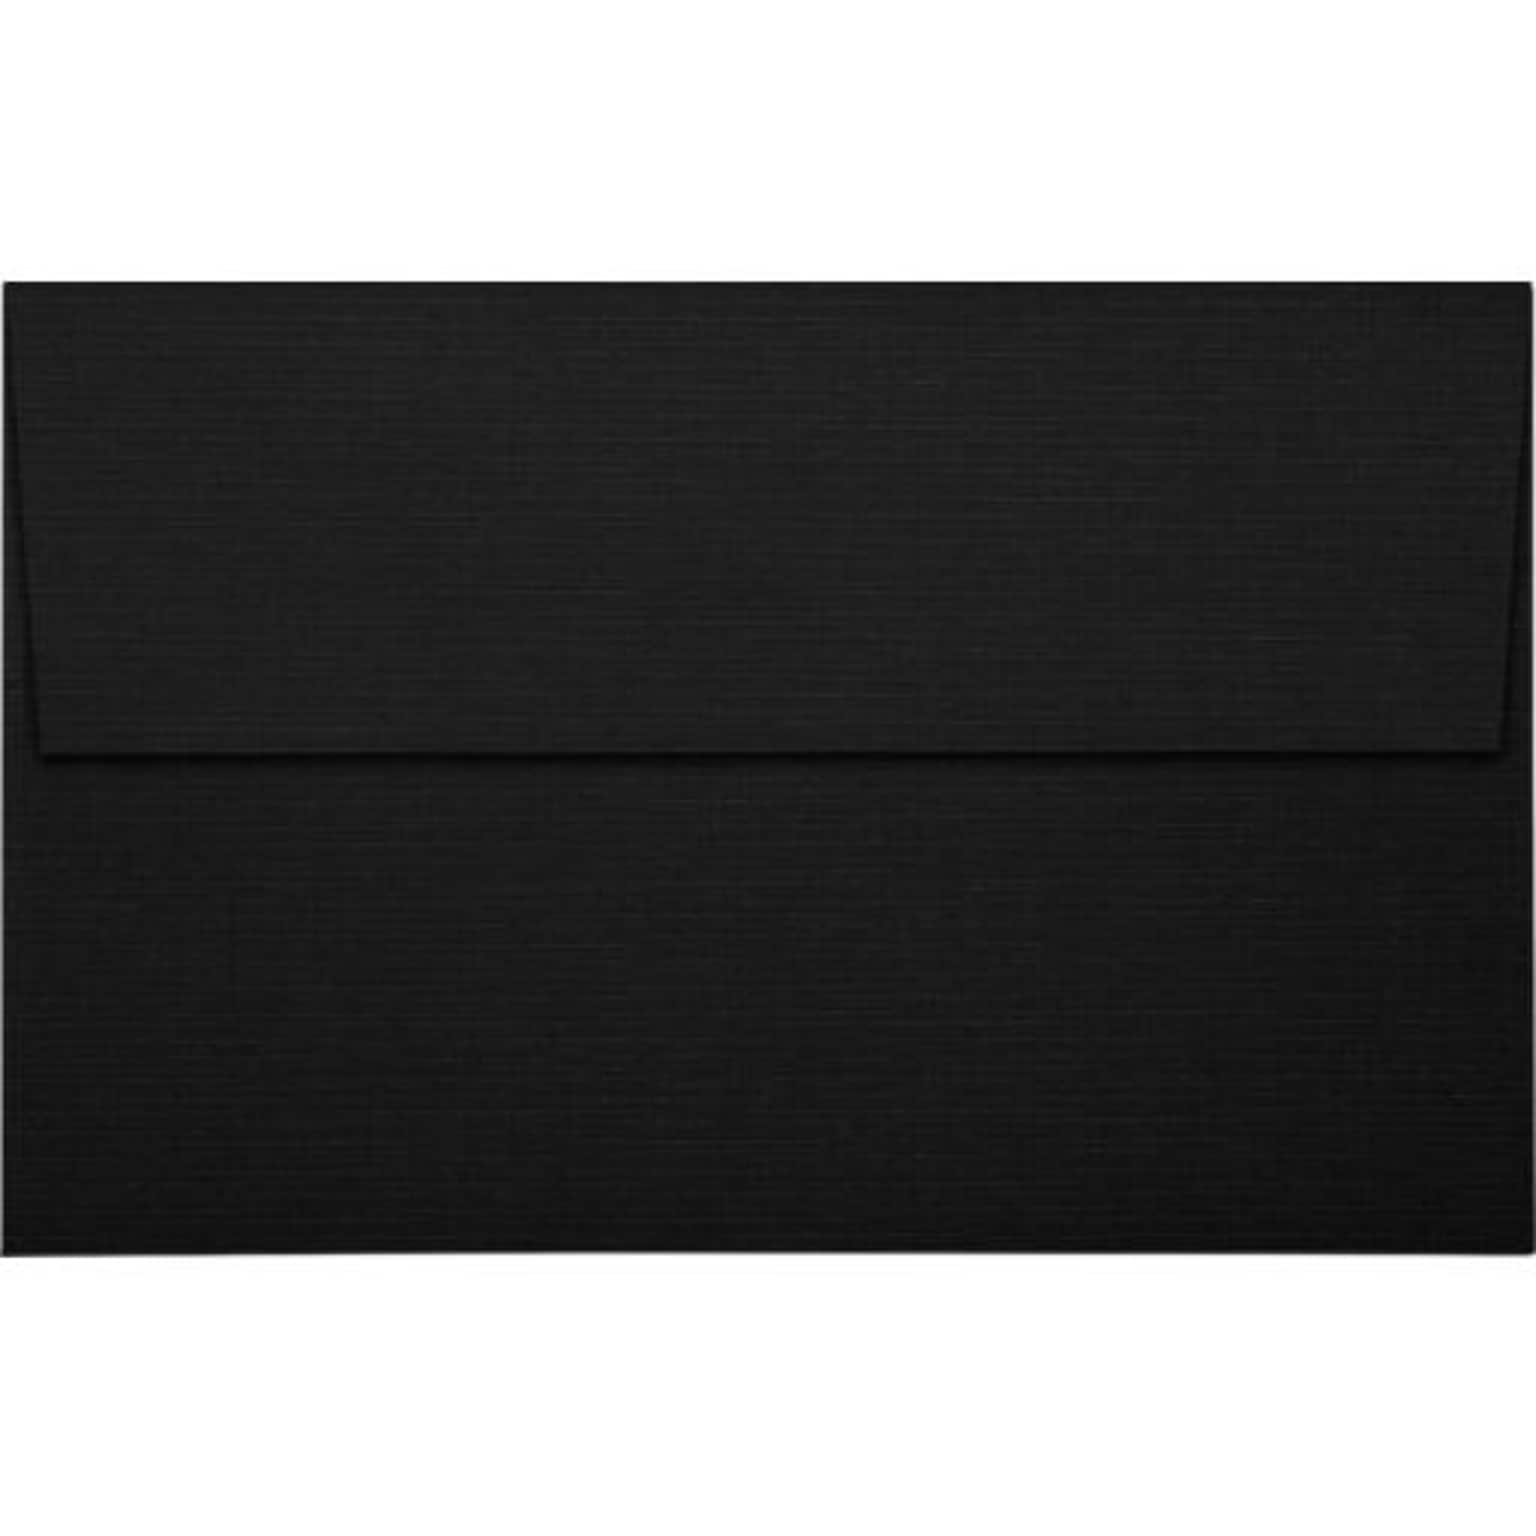 JAM Paper A10 Invitation Envelope, Black Linen, w Peel and Press Seal, 250 Pack, 6 x 9 1/2, Black (4590-BLI-250)